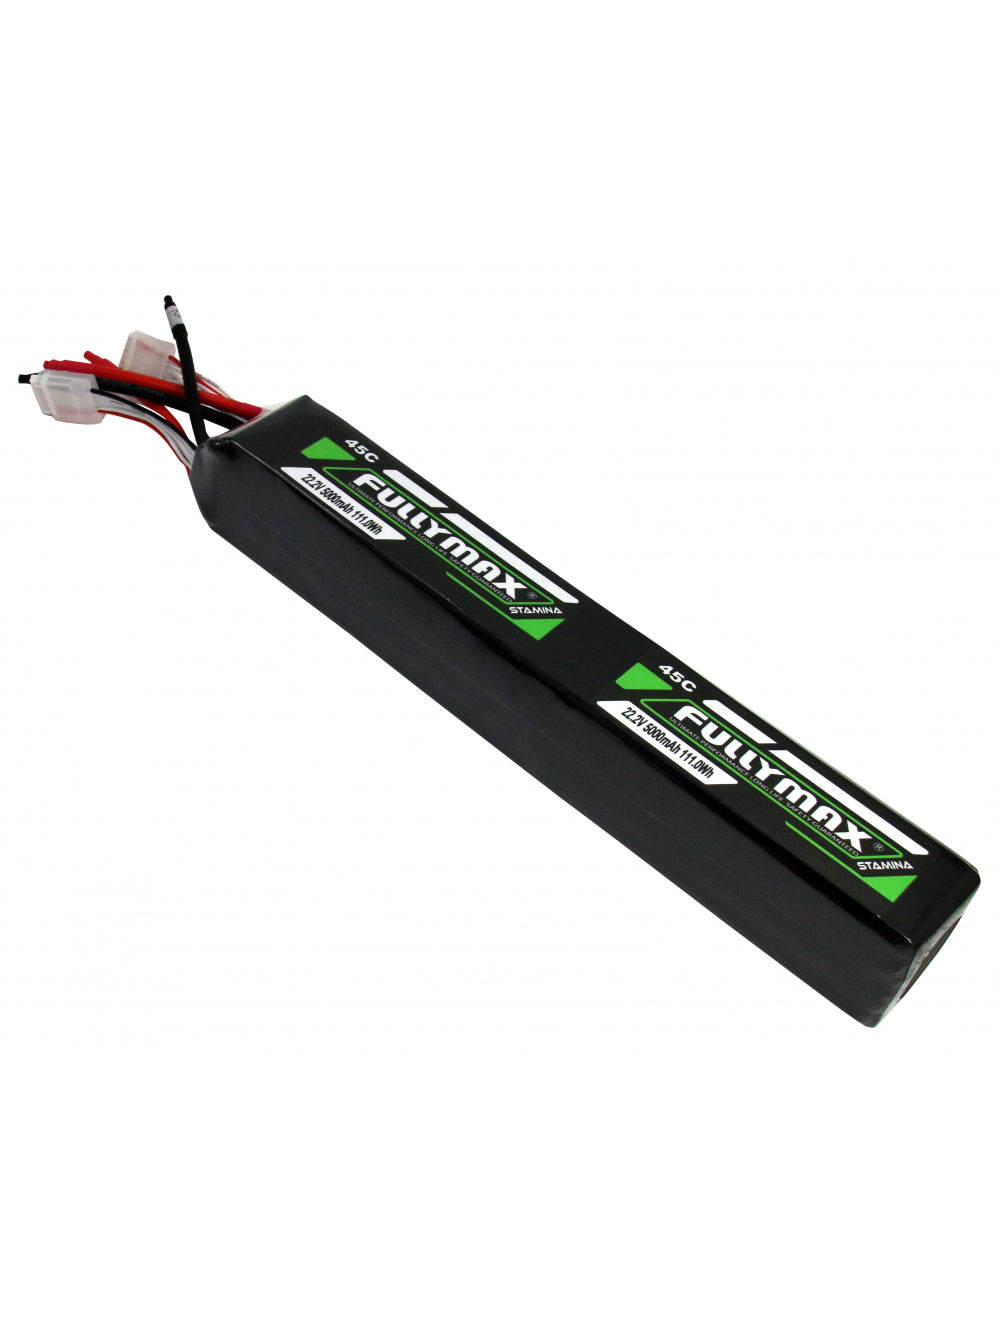 Overlander Fullymax 5000mAh 22.2V (x2) 12S 45C LiPo Battery - EC5 Connector 3449